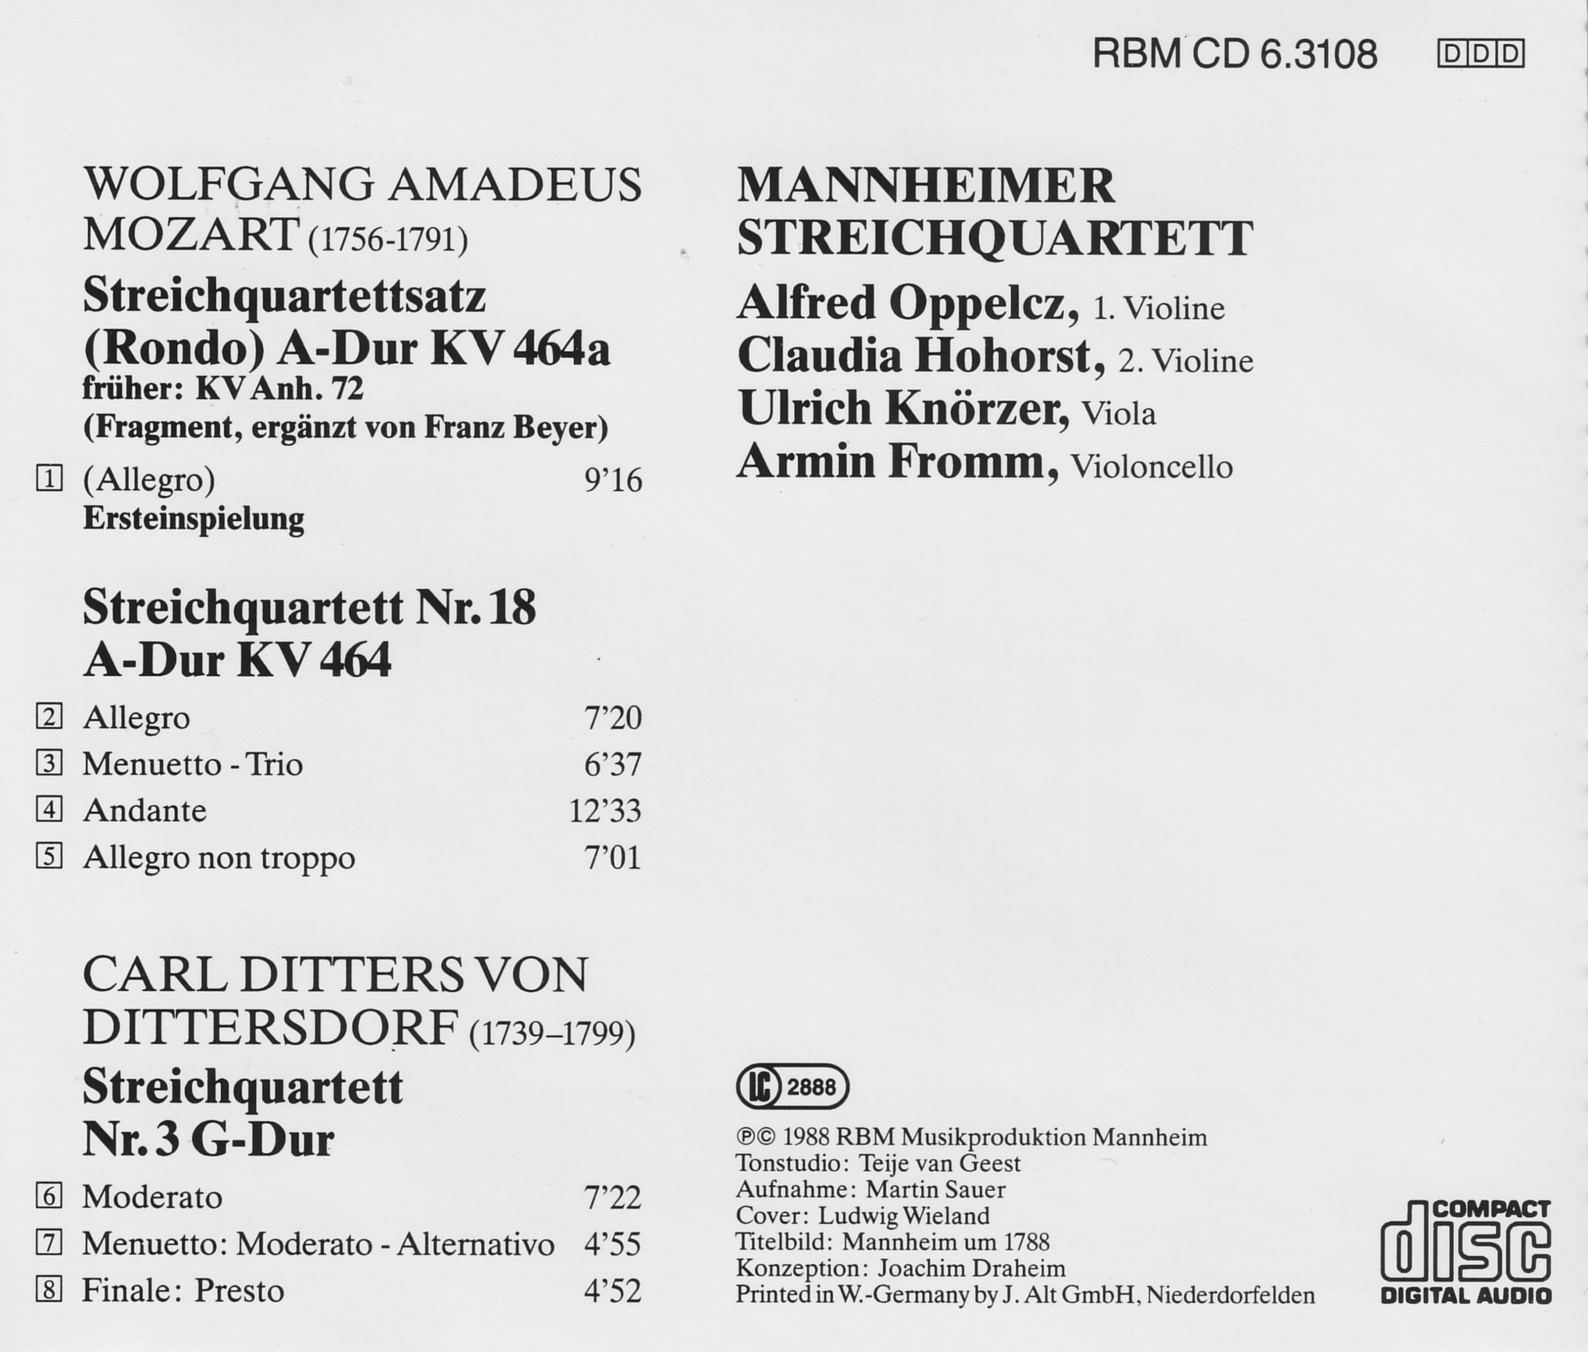 Wolfgang Amadeus Mozart / Carl Ditters von Dittersdorf - Mannheimer Streichquartett